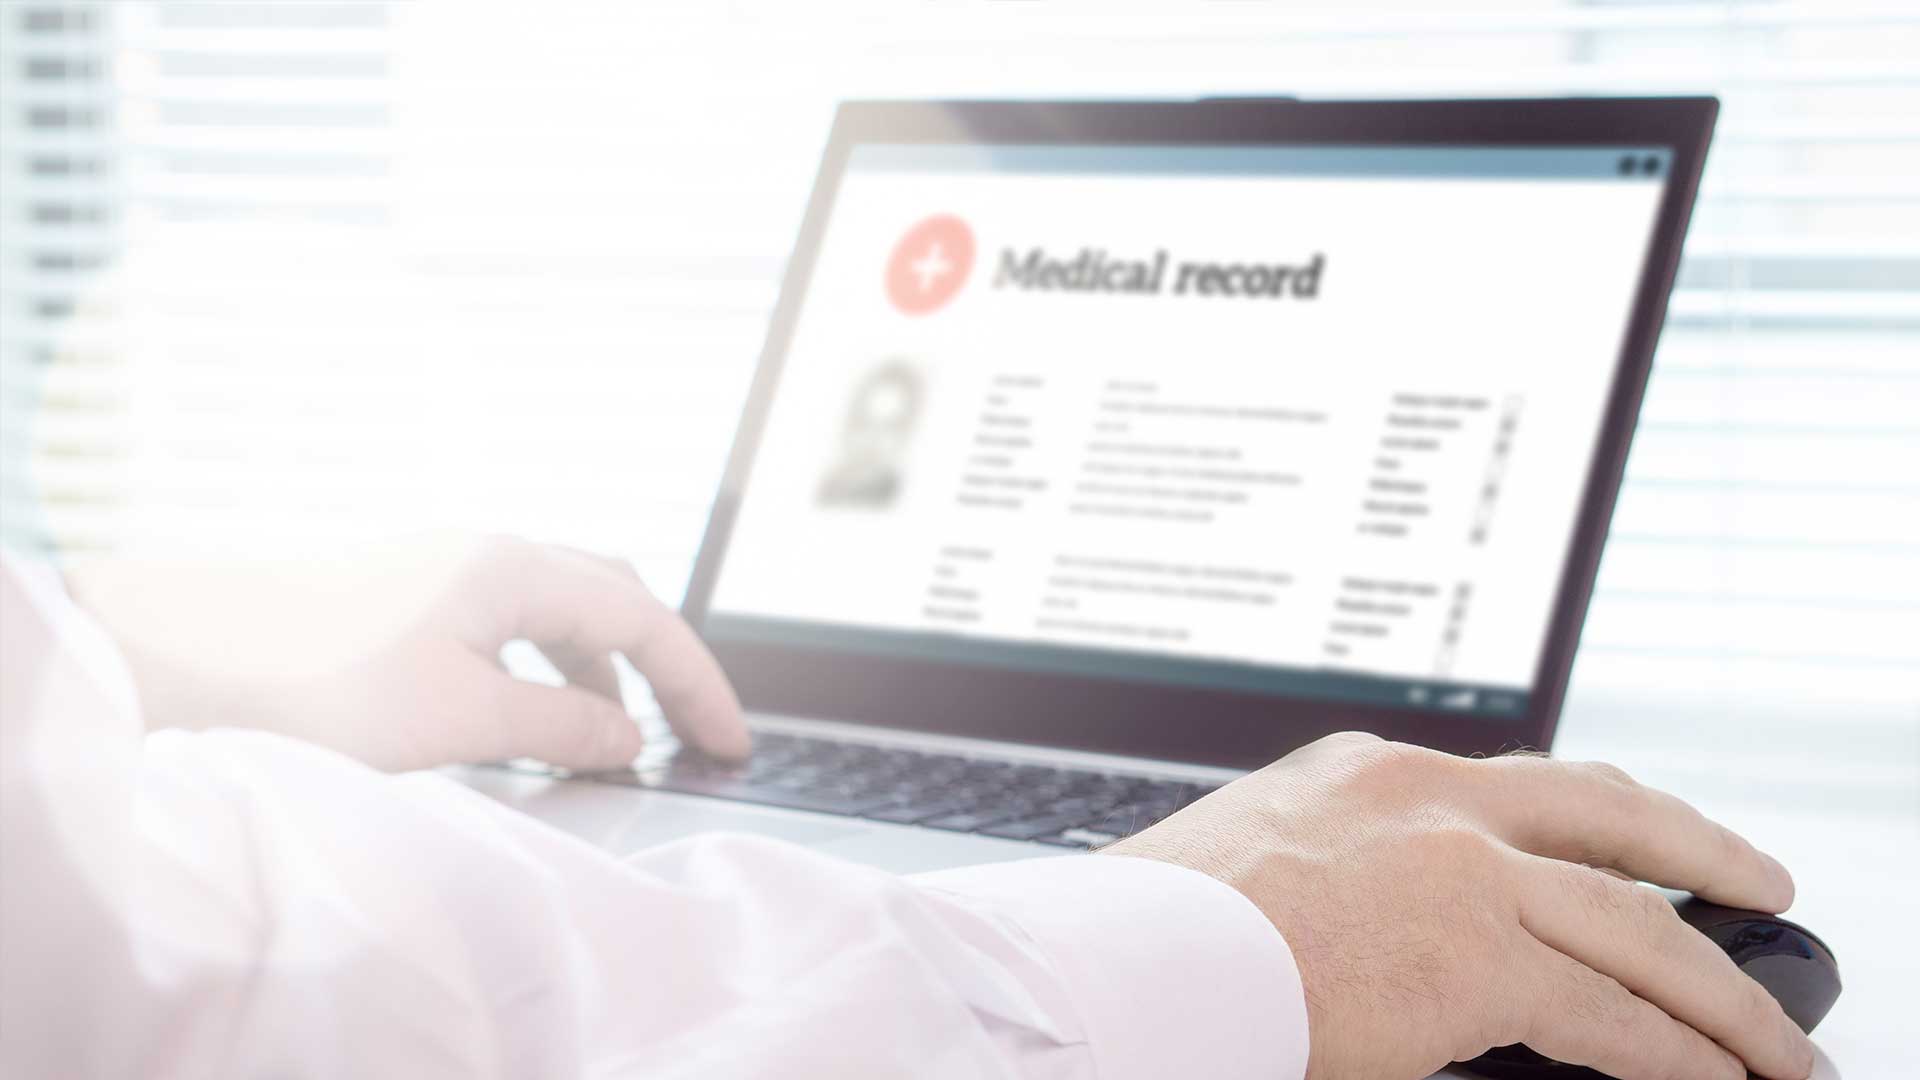 Digitizing Medical Records